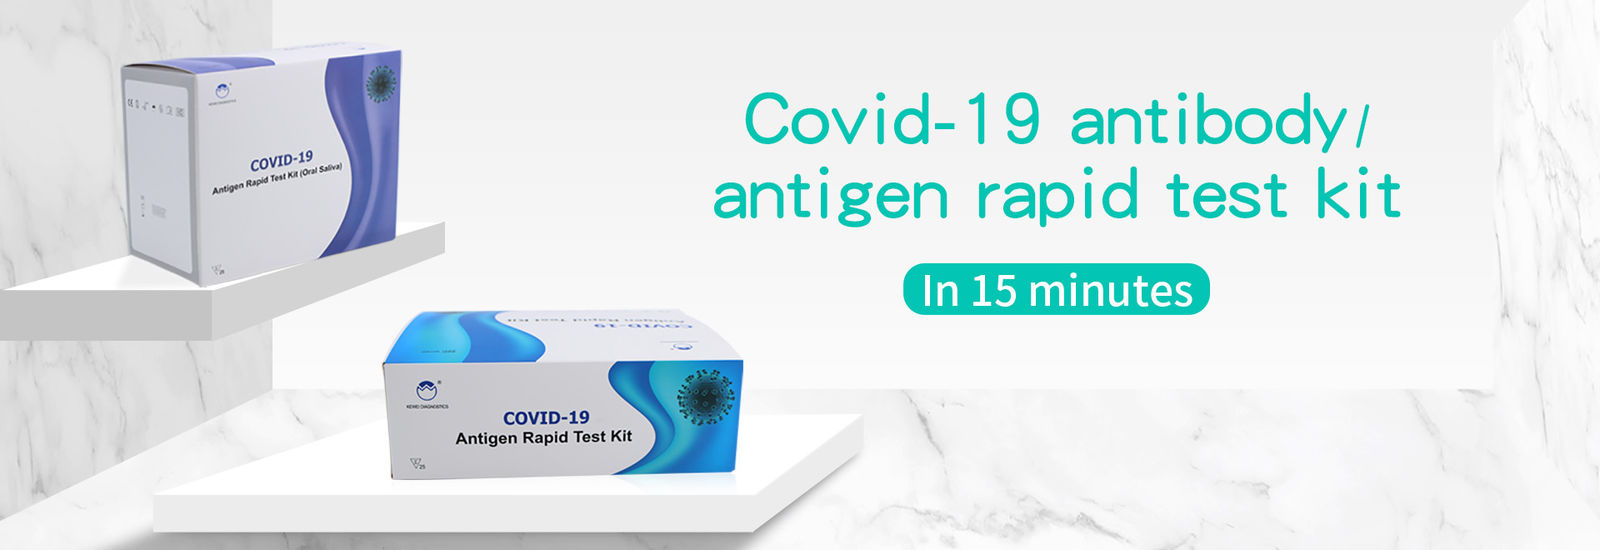 Набор теста антигена Covid-19 быстрый